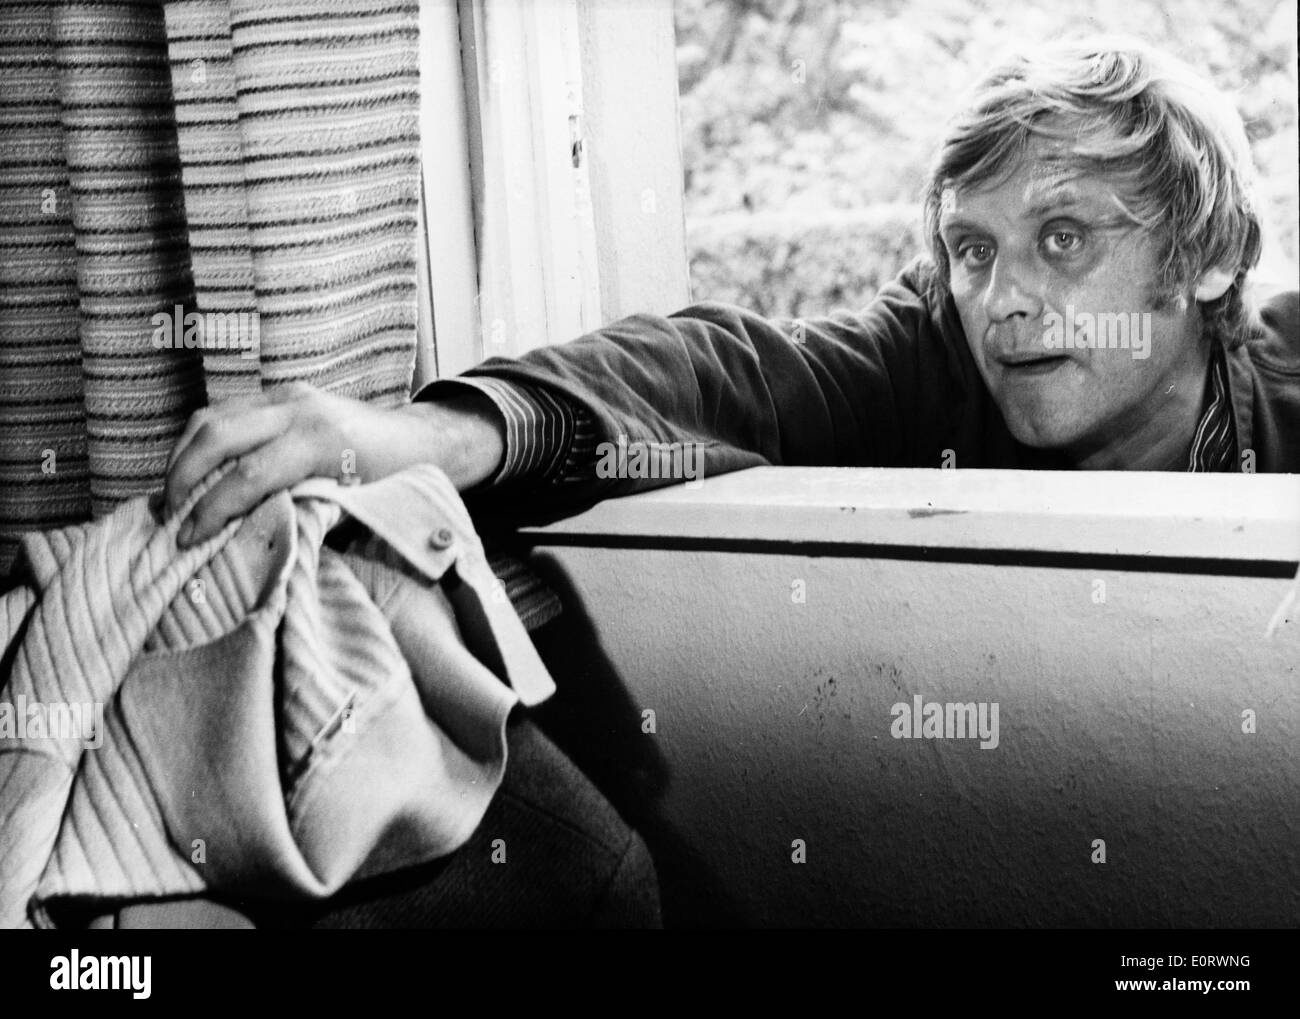 Actor Horst Frank in film scene Stock Photo